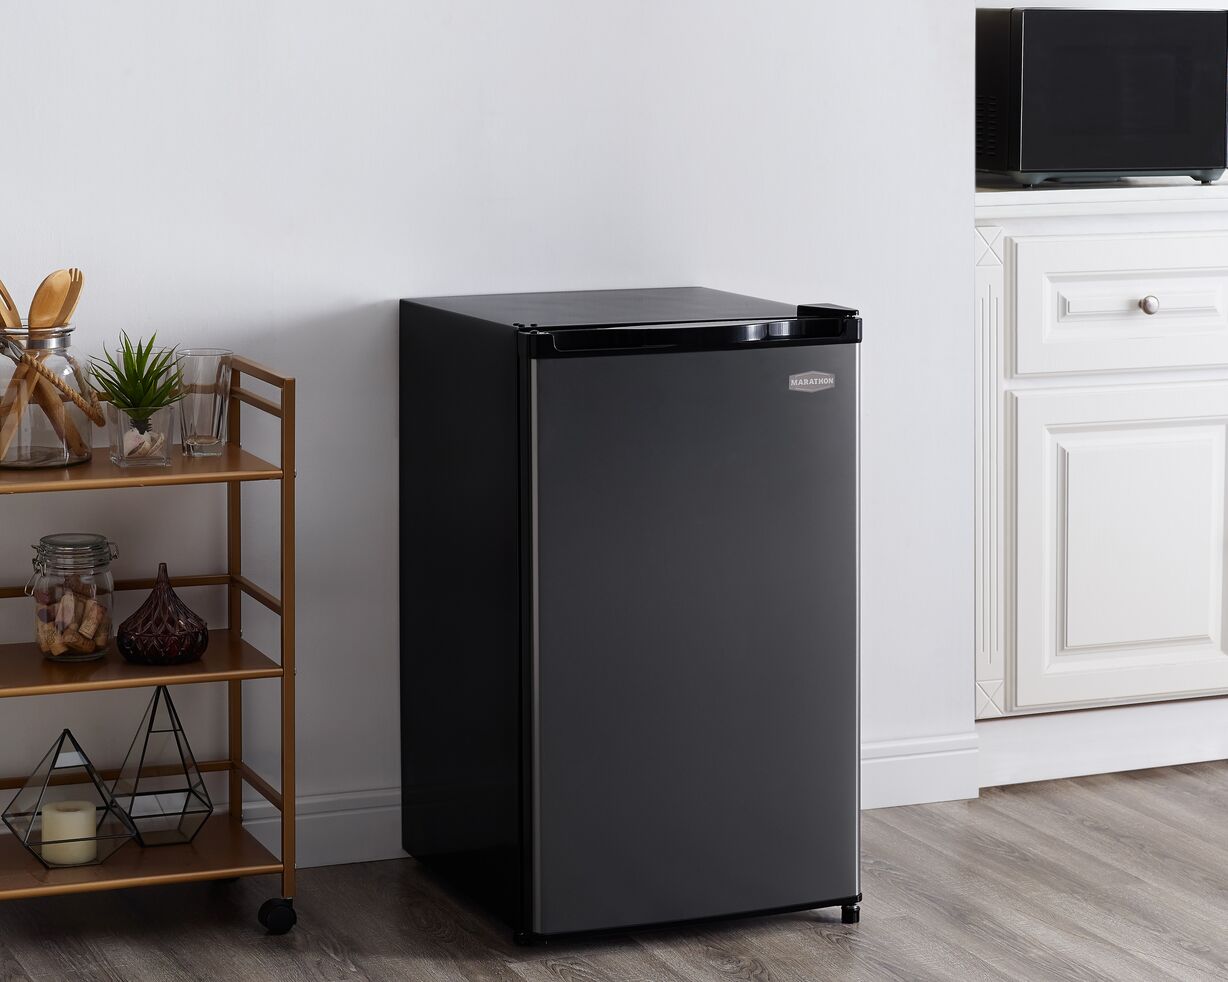 Marathon Black Stainless Compact Refrigerator (4.5 cu.ft.) - MAR45BLS-1